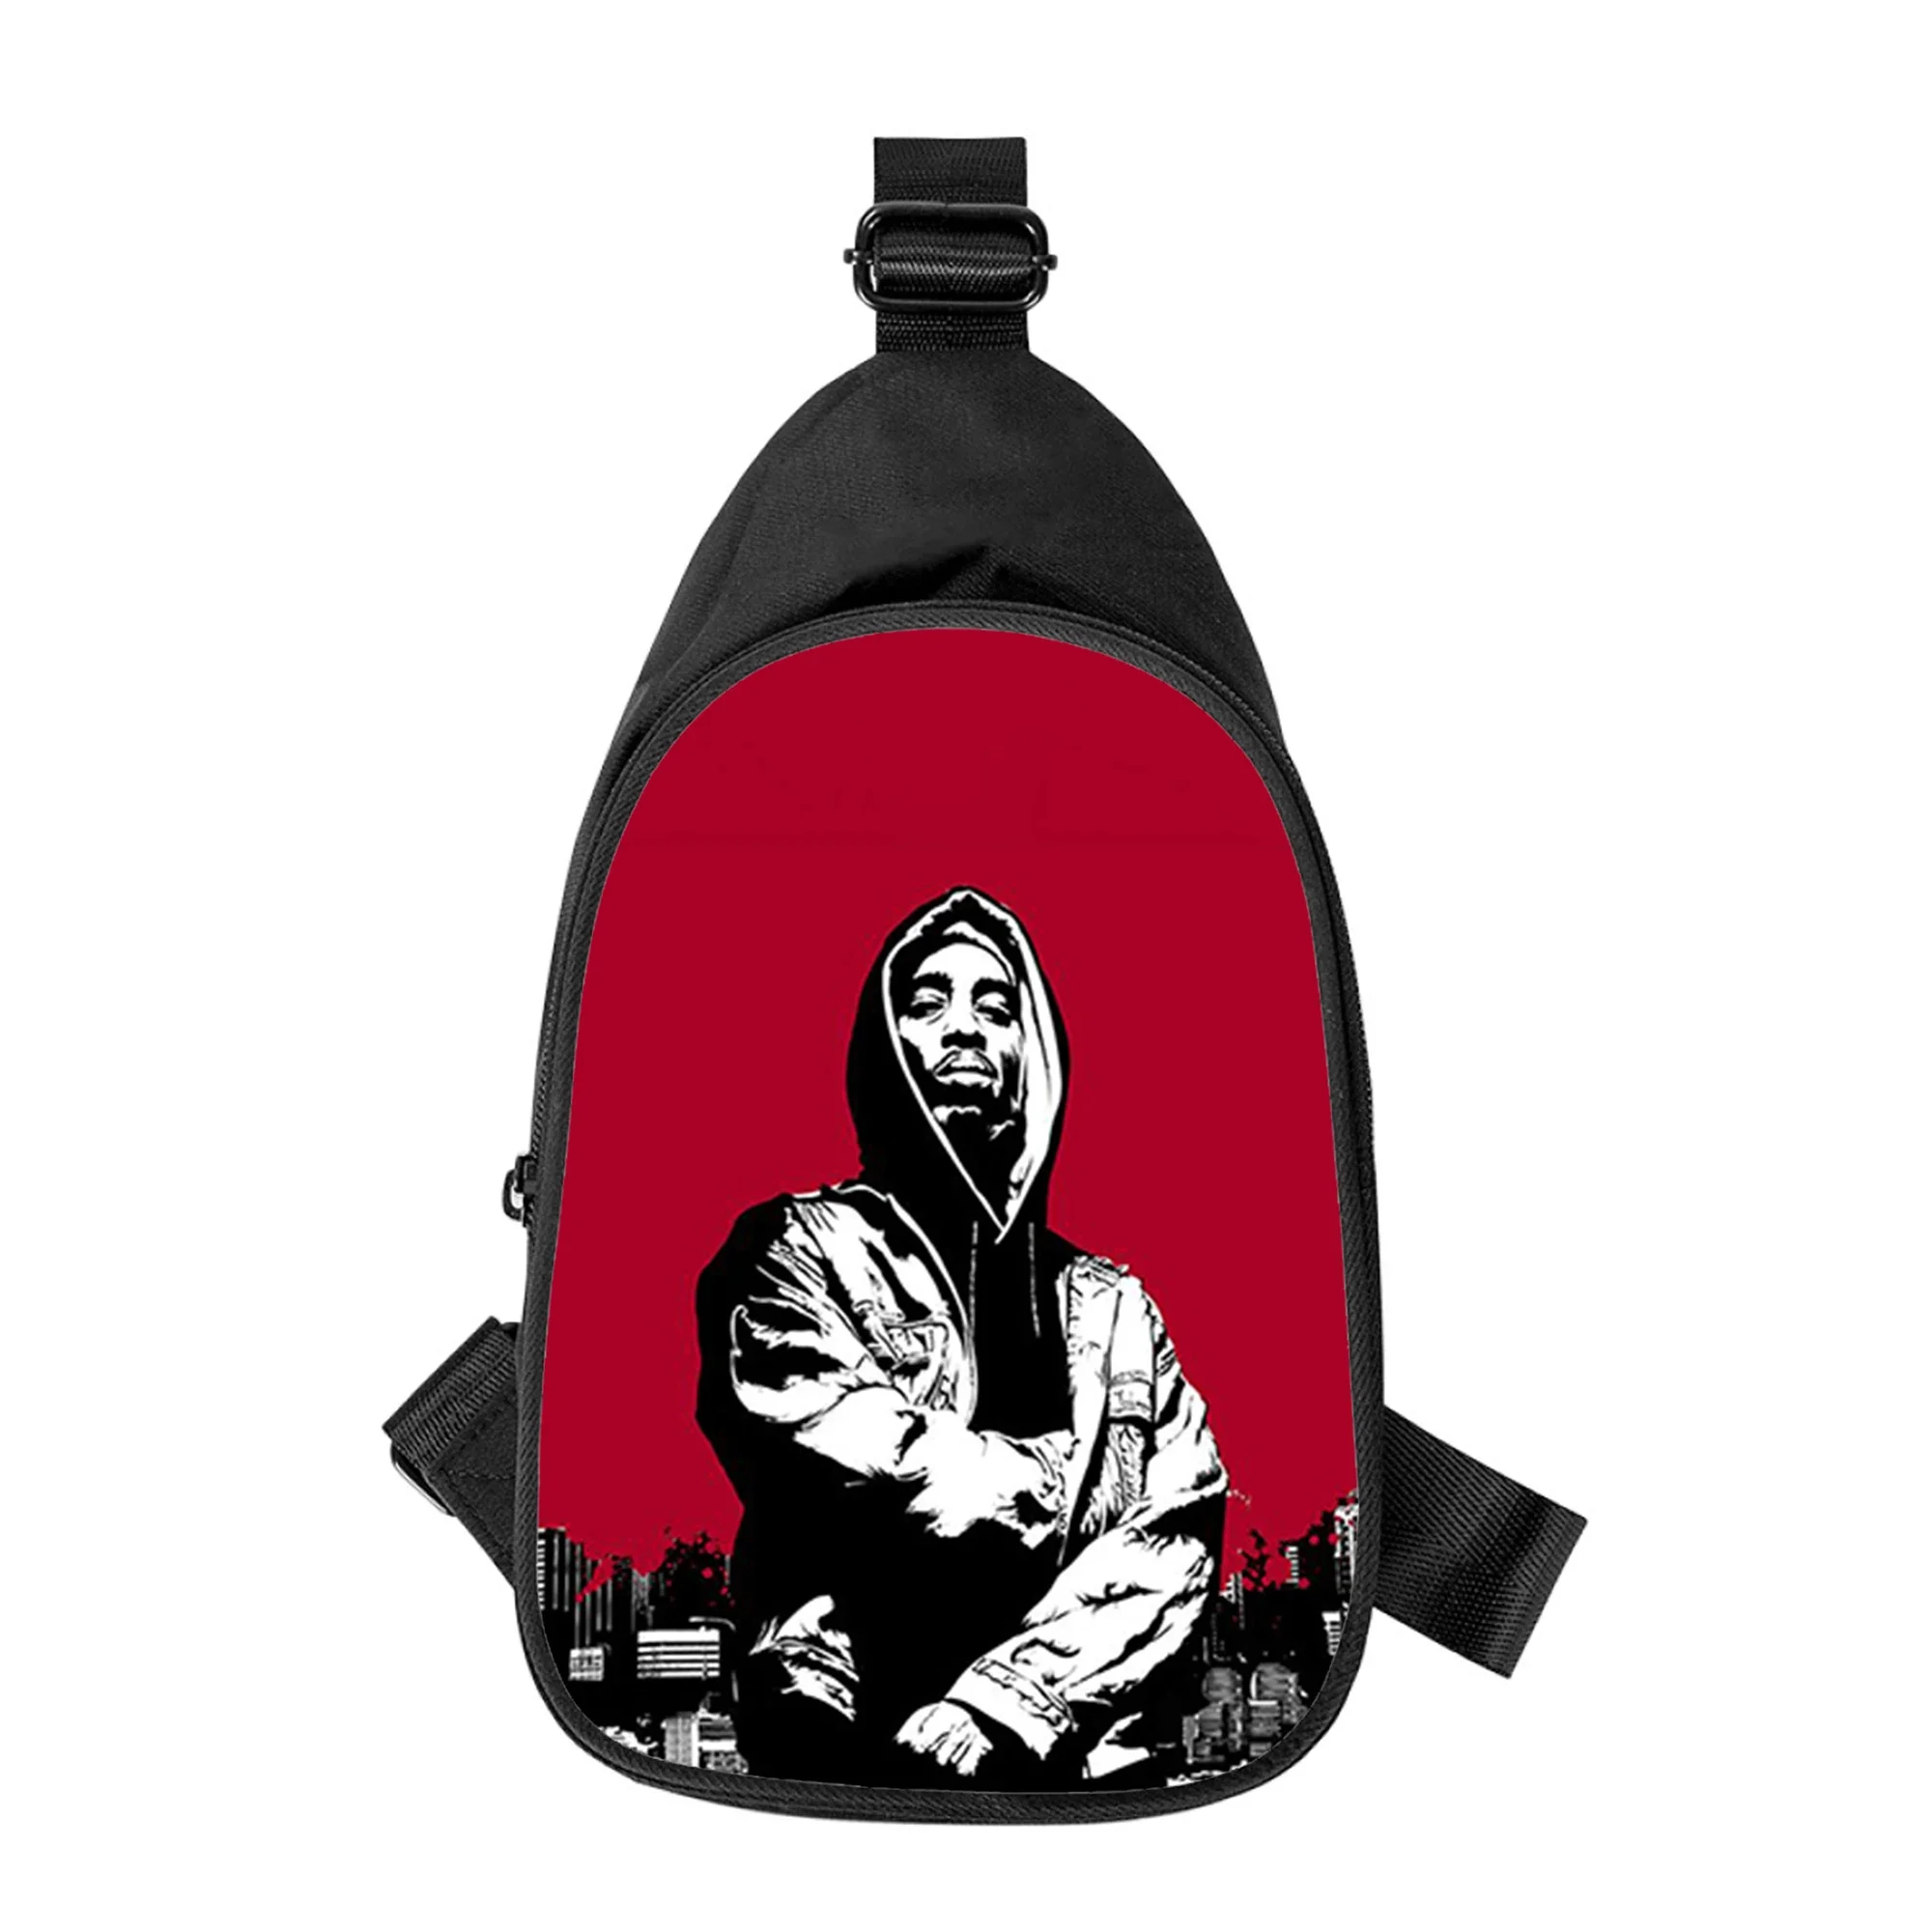 Rapper 2pac singer Tupac Print New Men Cross Chest Bag Diagonally Women Shoulder Bag Husband School Waist Pack Male chest pack